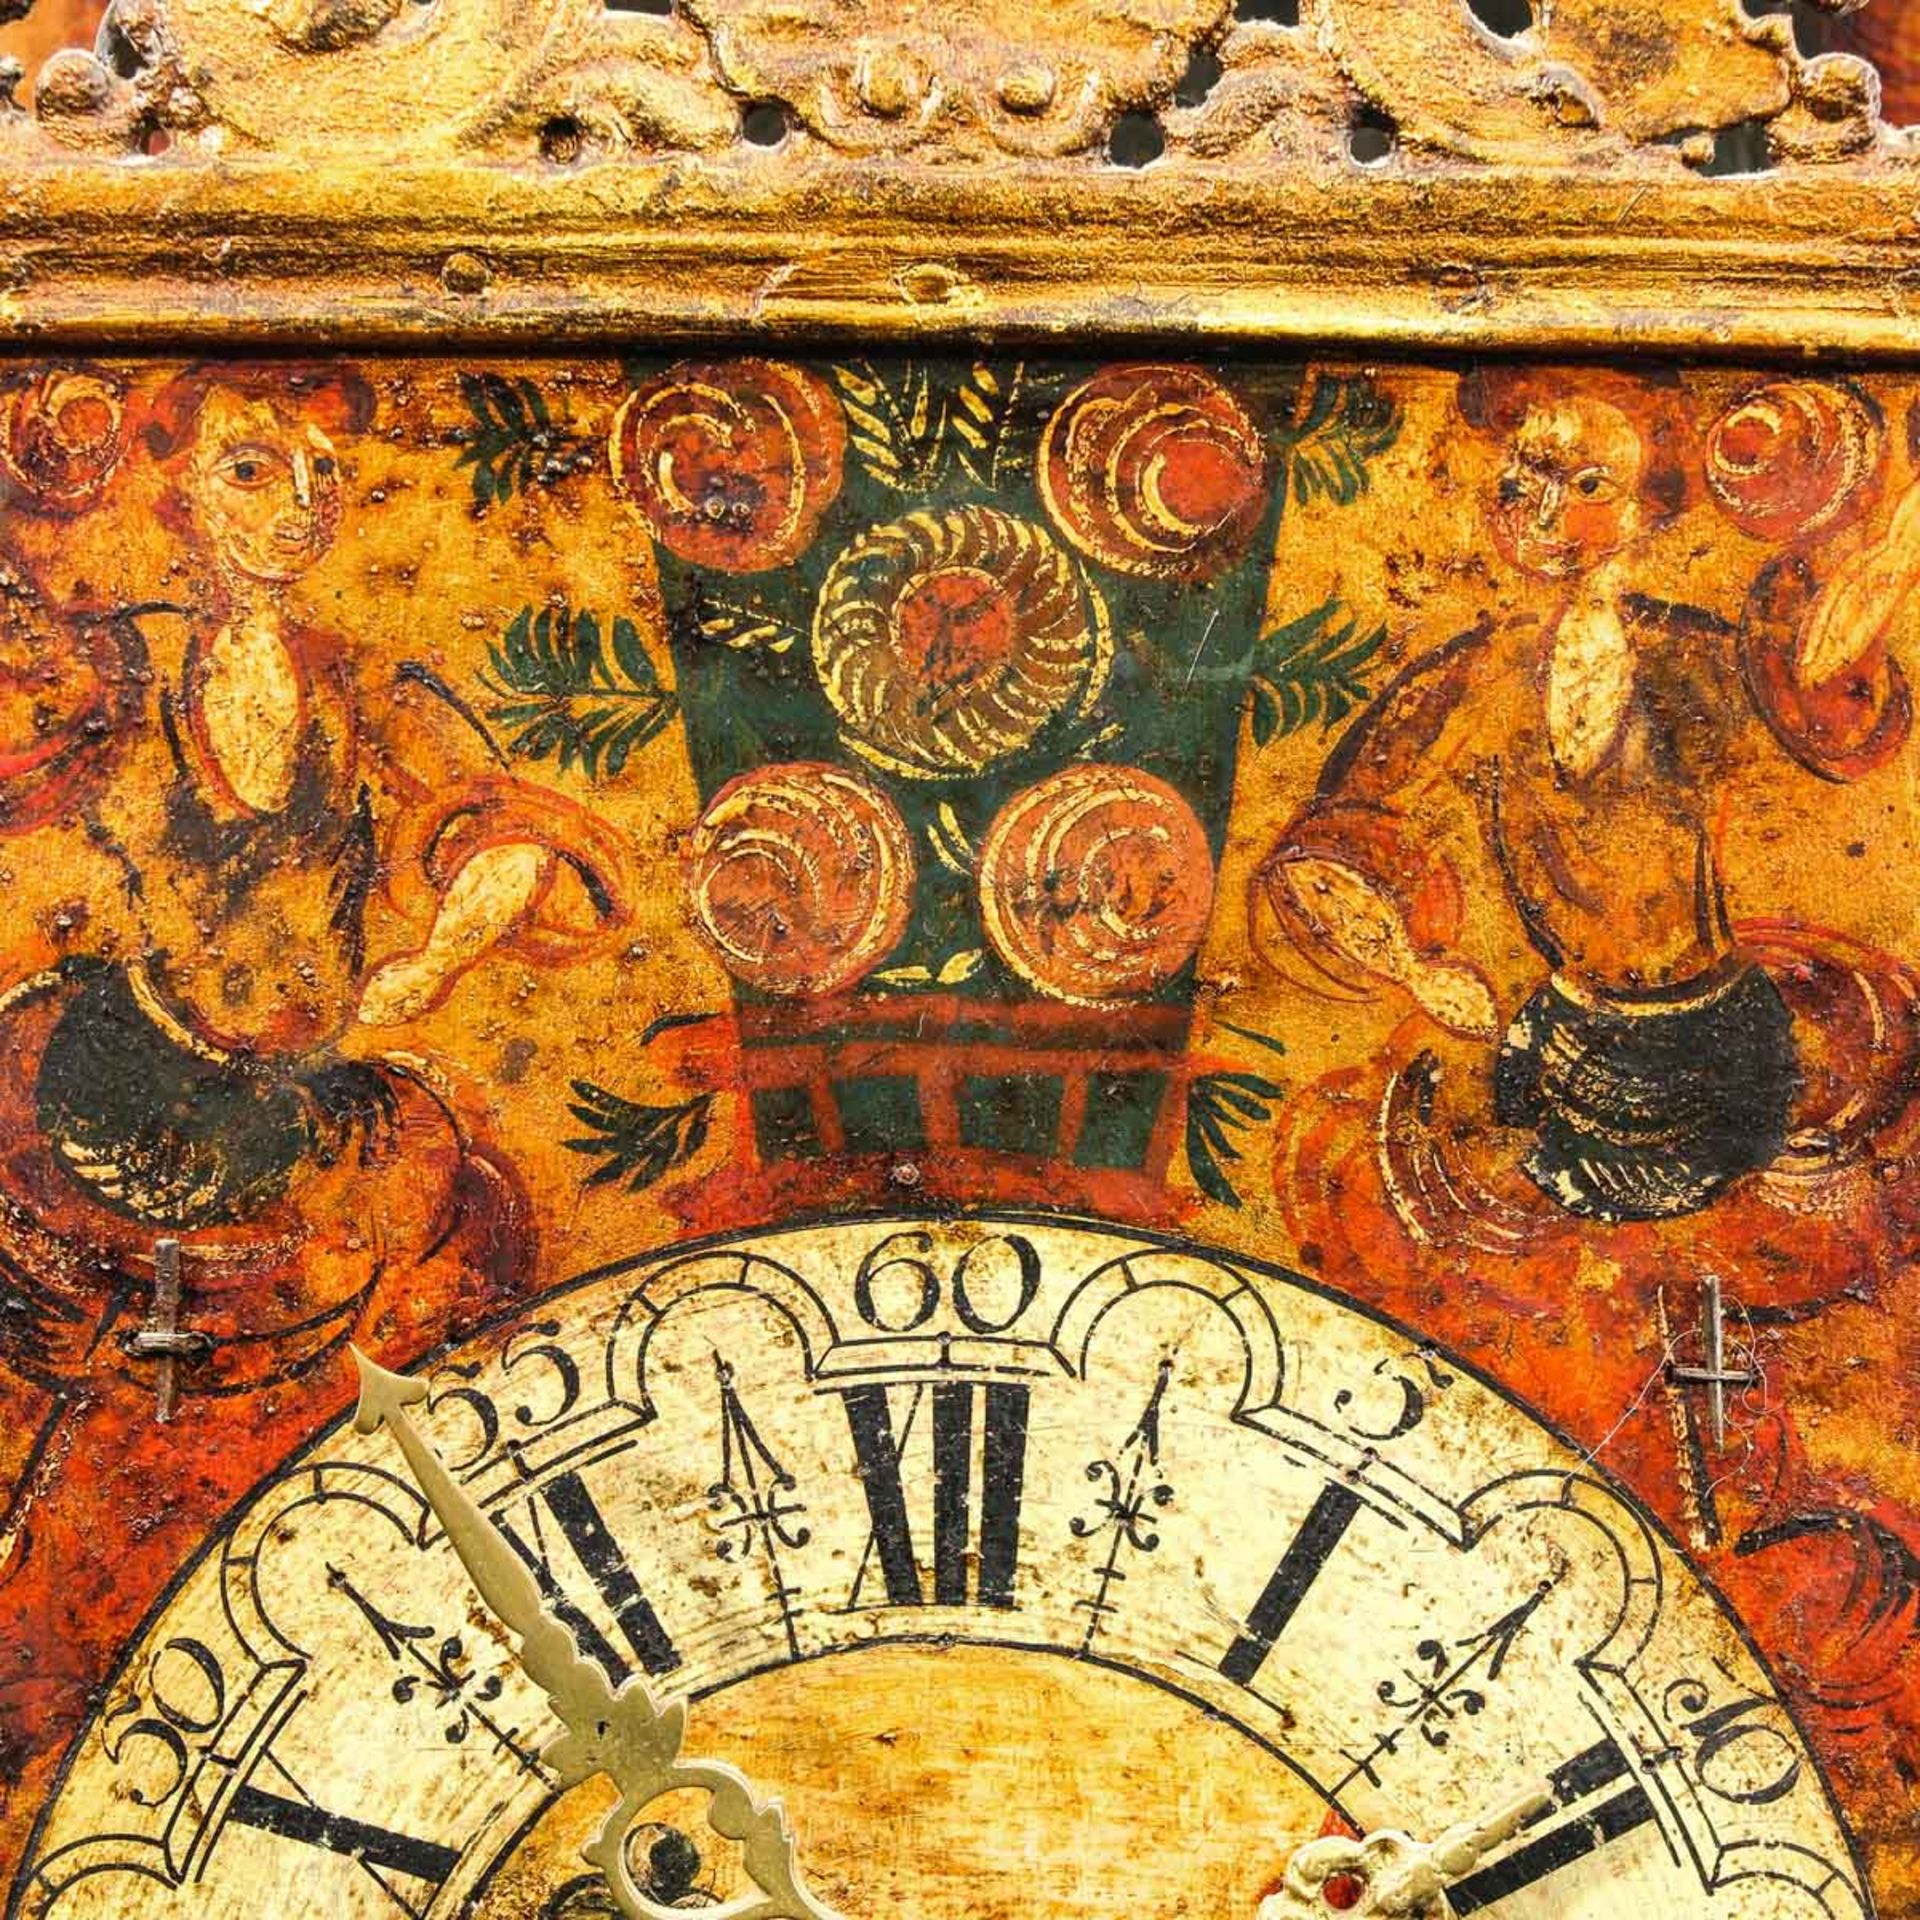 A Dutch Wall Clock - Image 6 of 7